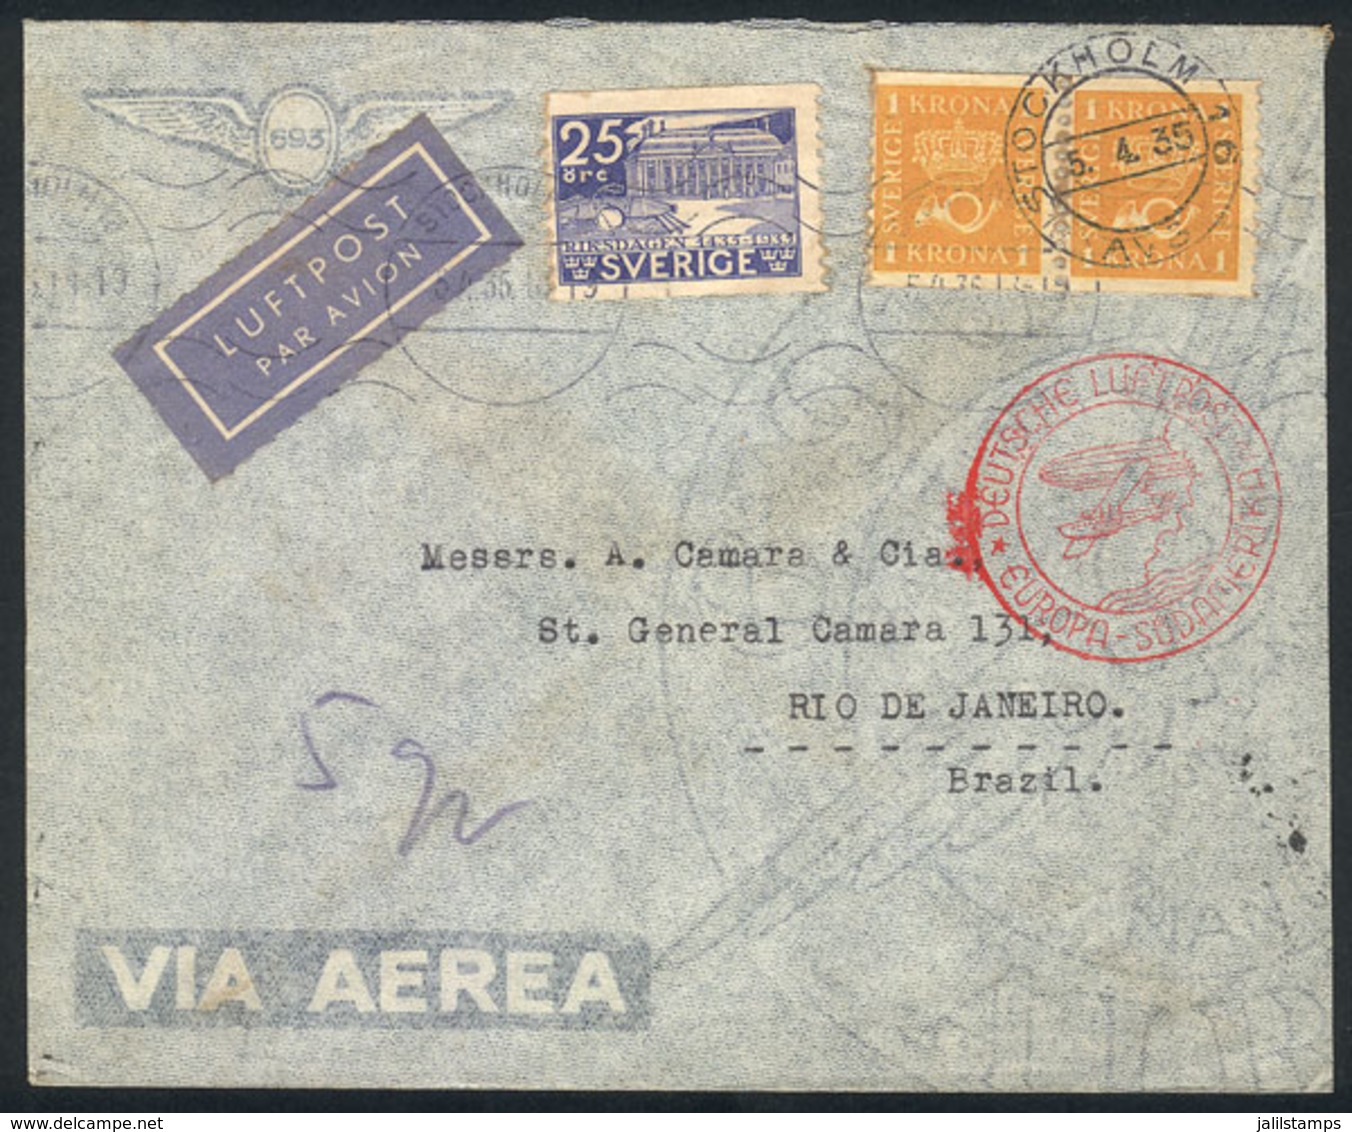 SWEDEN: 5/AP/1935 Stockholm - Rio De Janeiro: Airmail Cover Sent Via Germany (DLH), VF Quality! - Lettres & Documents